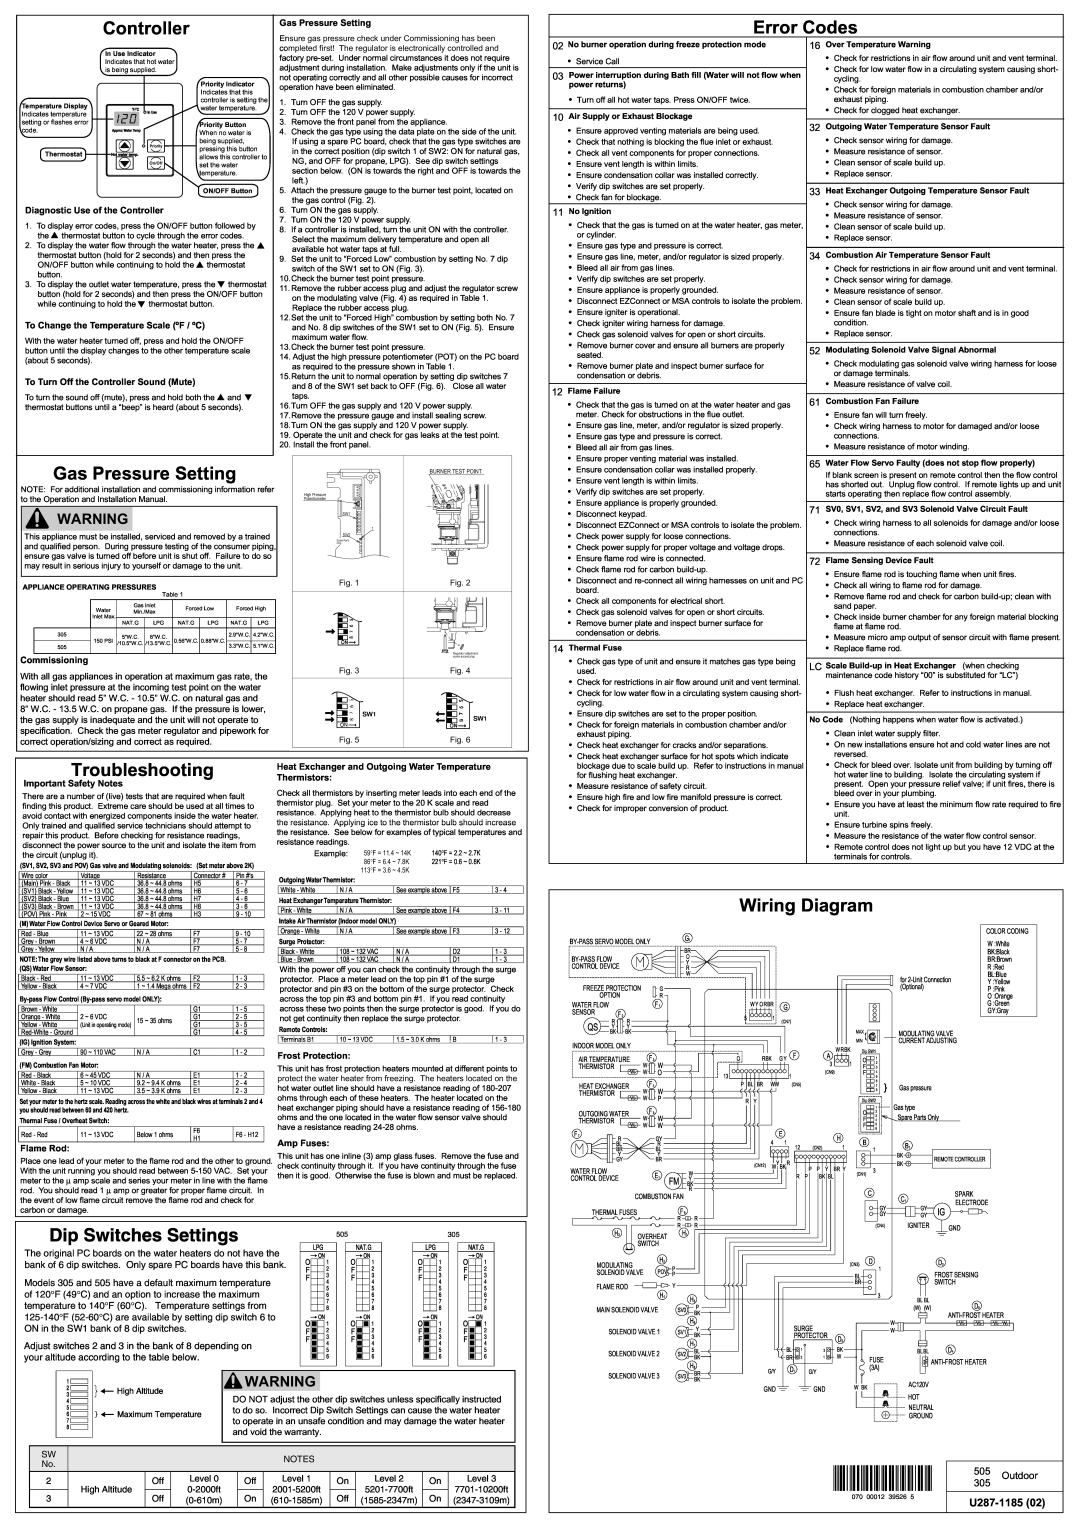 American Water Heater 505 warranty Troubleshooting, Wiring Diagram, U287-1185, Outdoor 305 